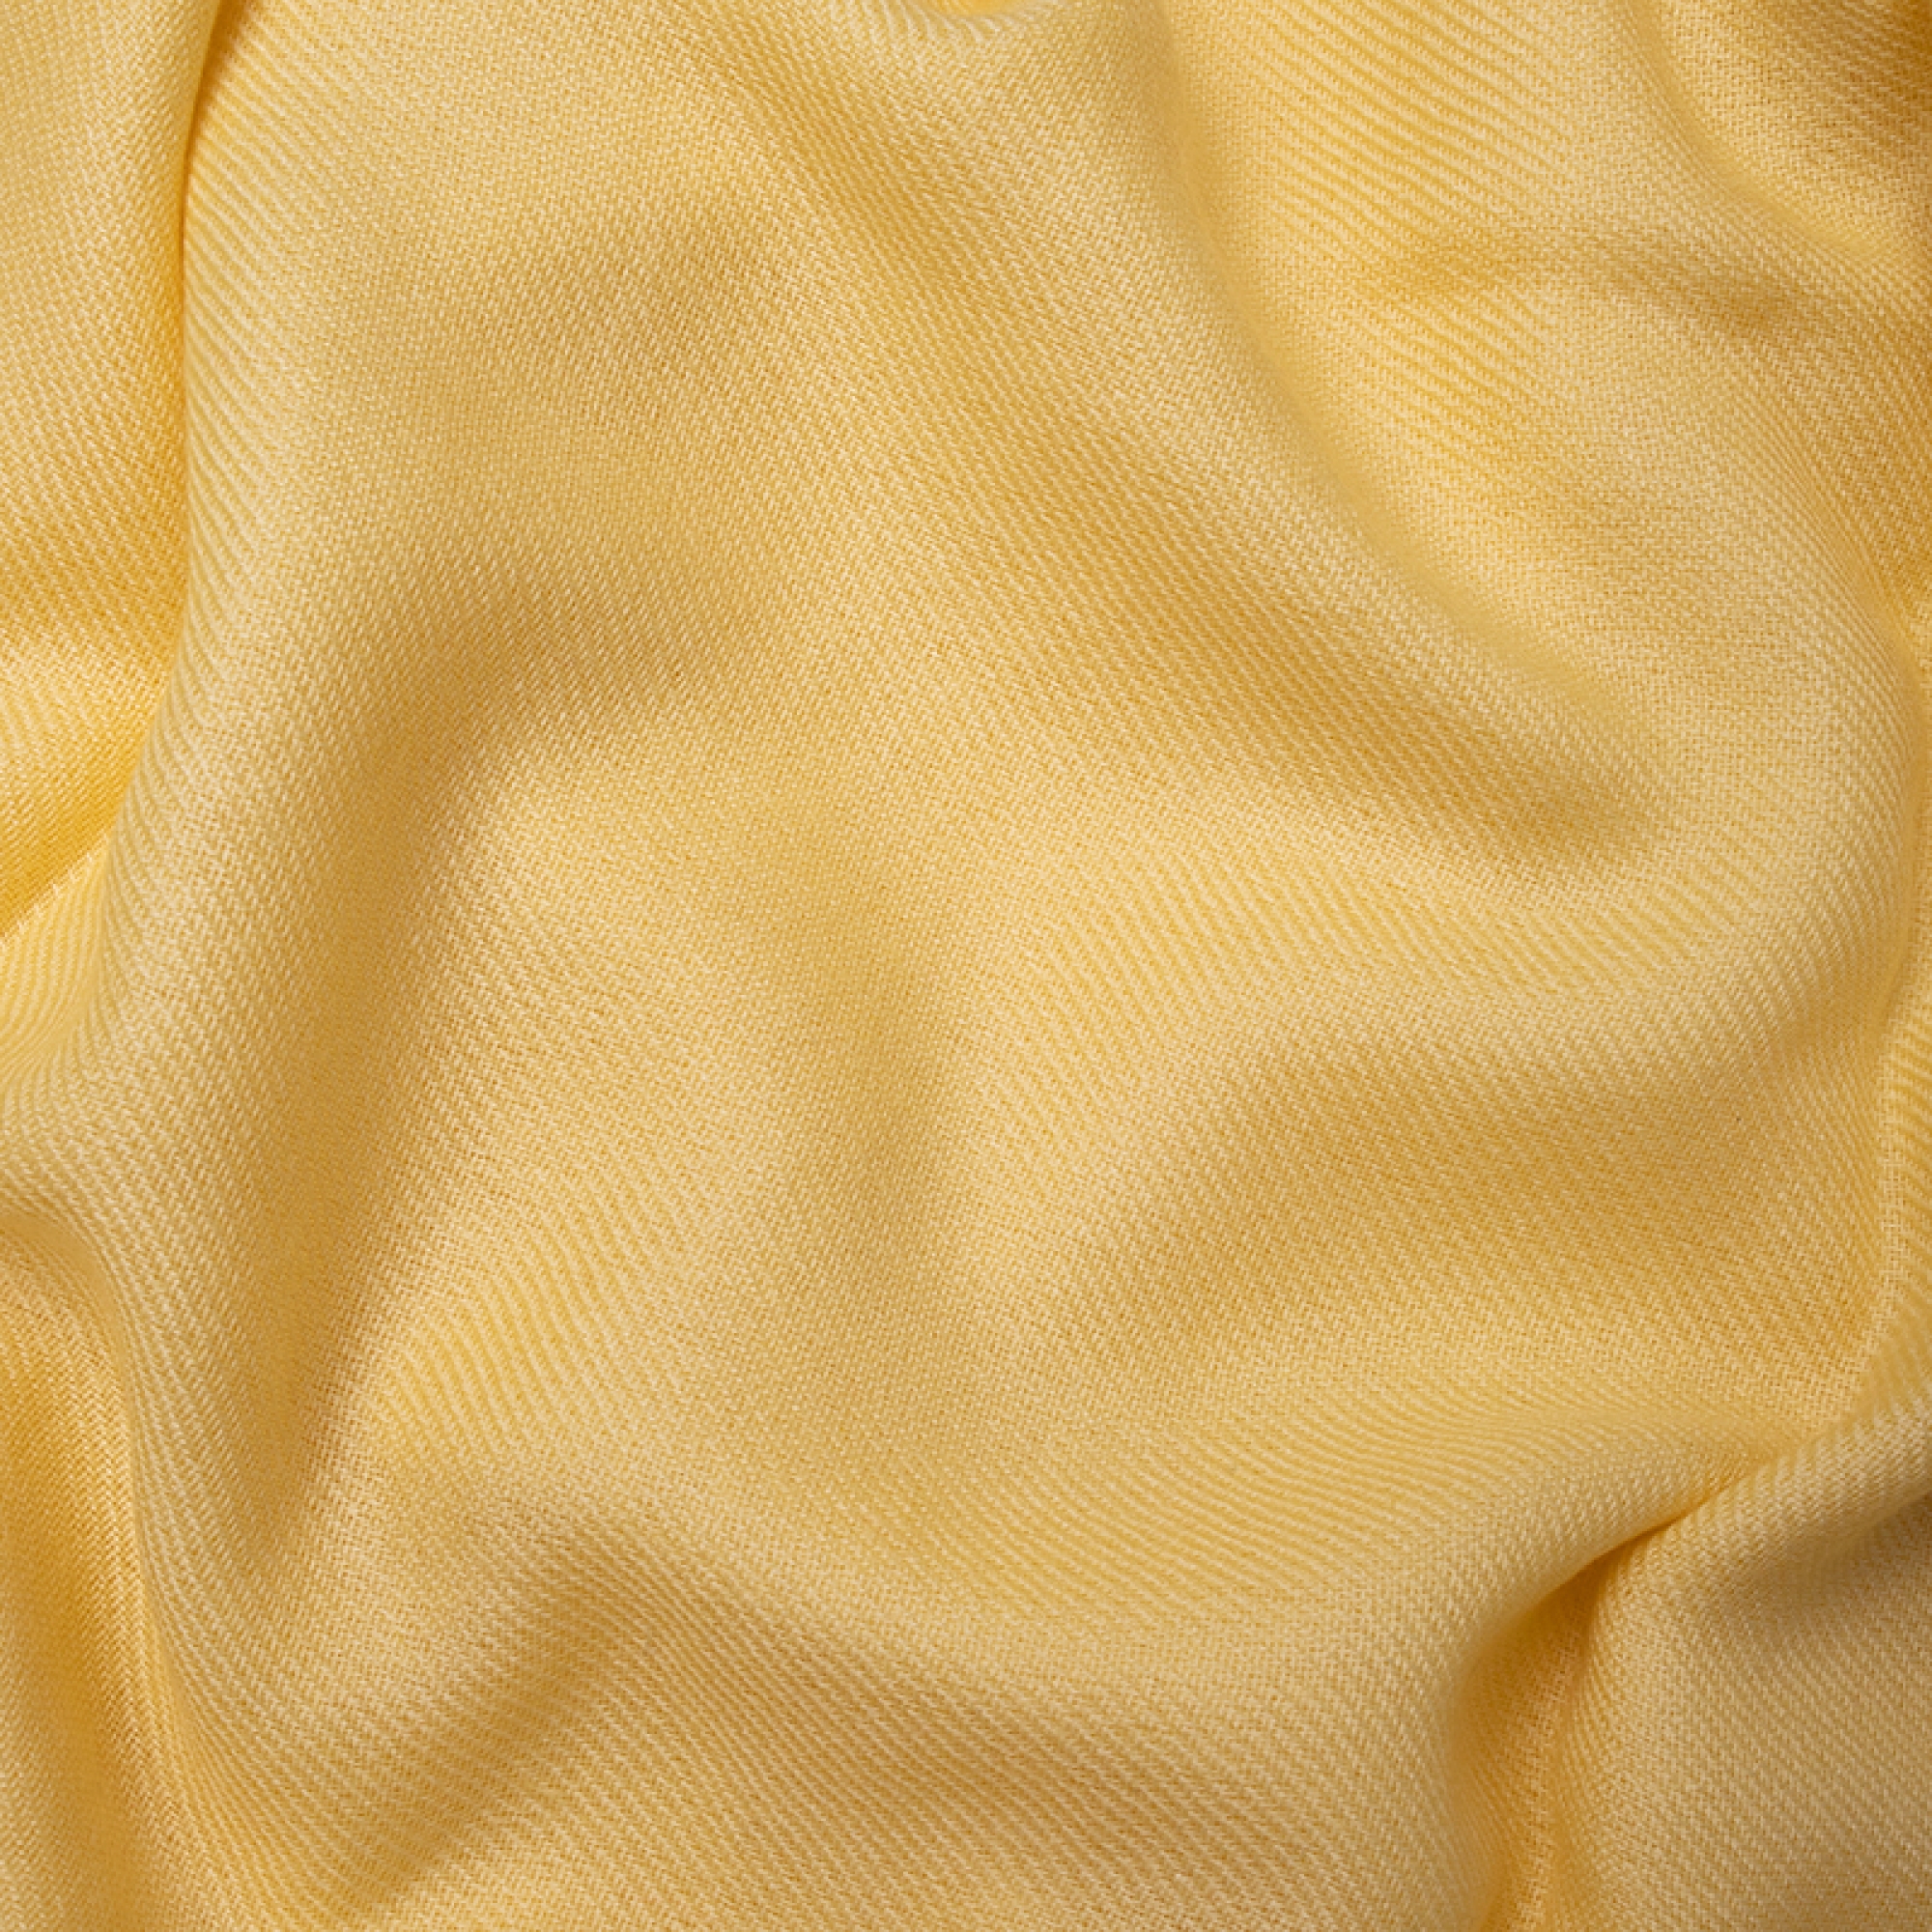 Cashmere accessories blanket frisbi 147 x 203 mellow yellow 147 x 203 cm